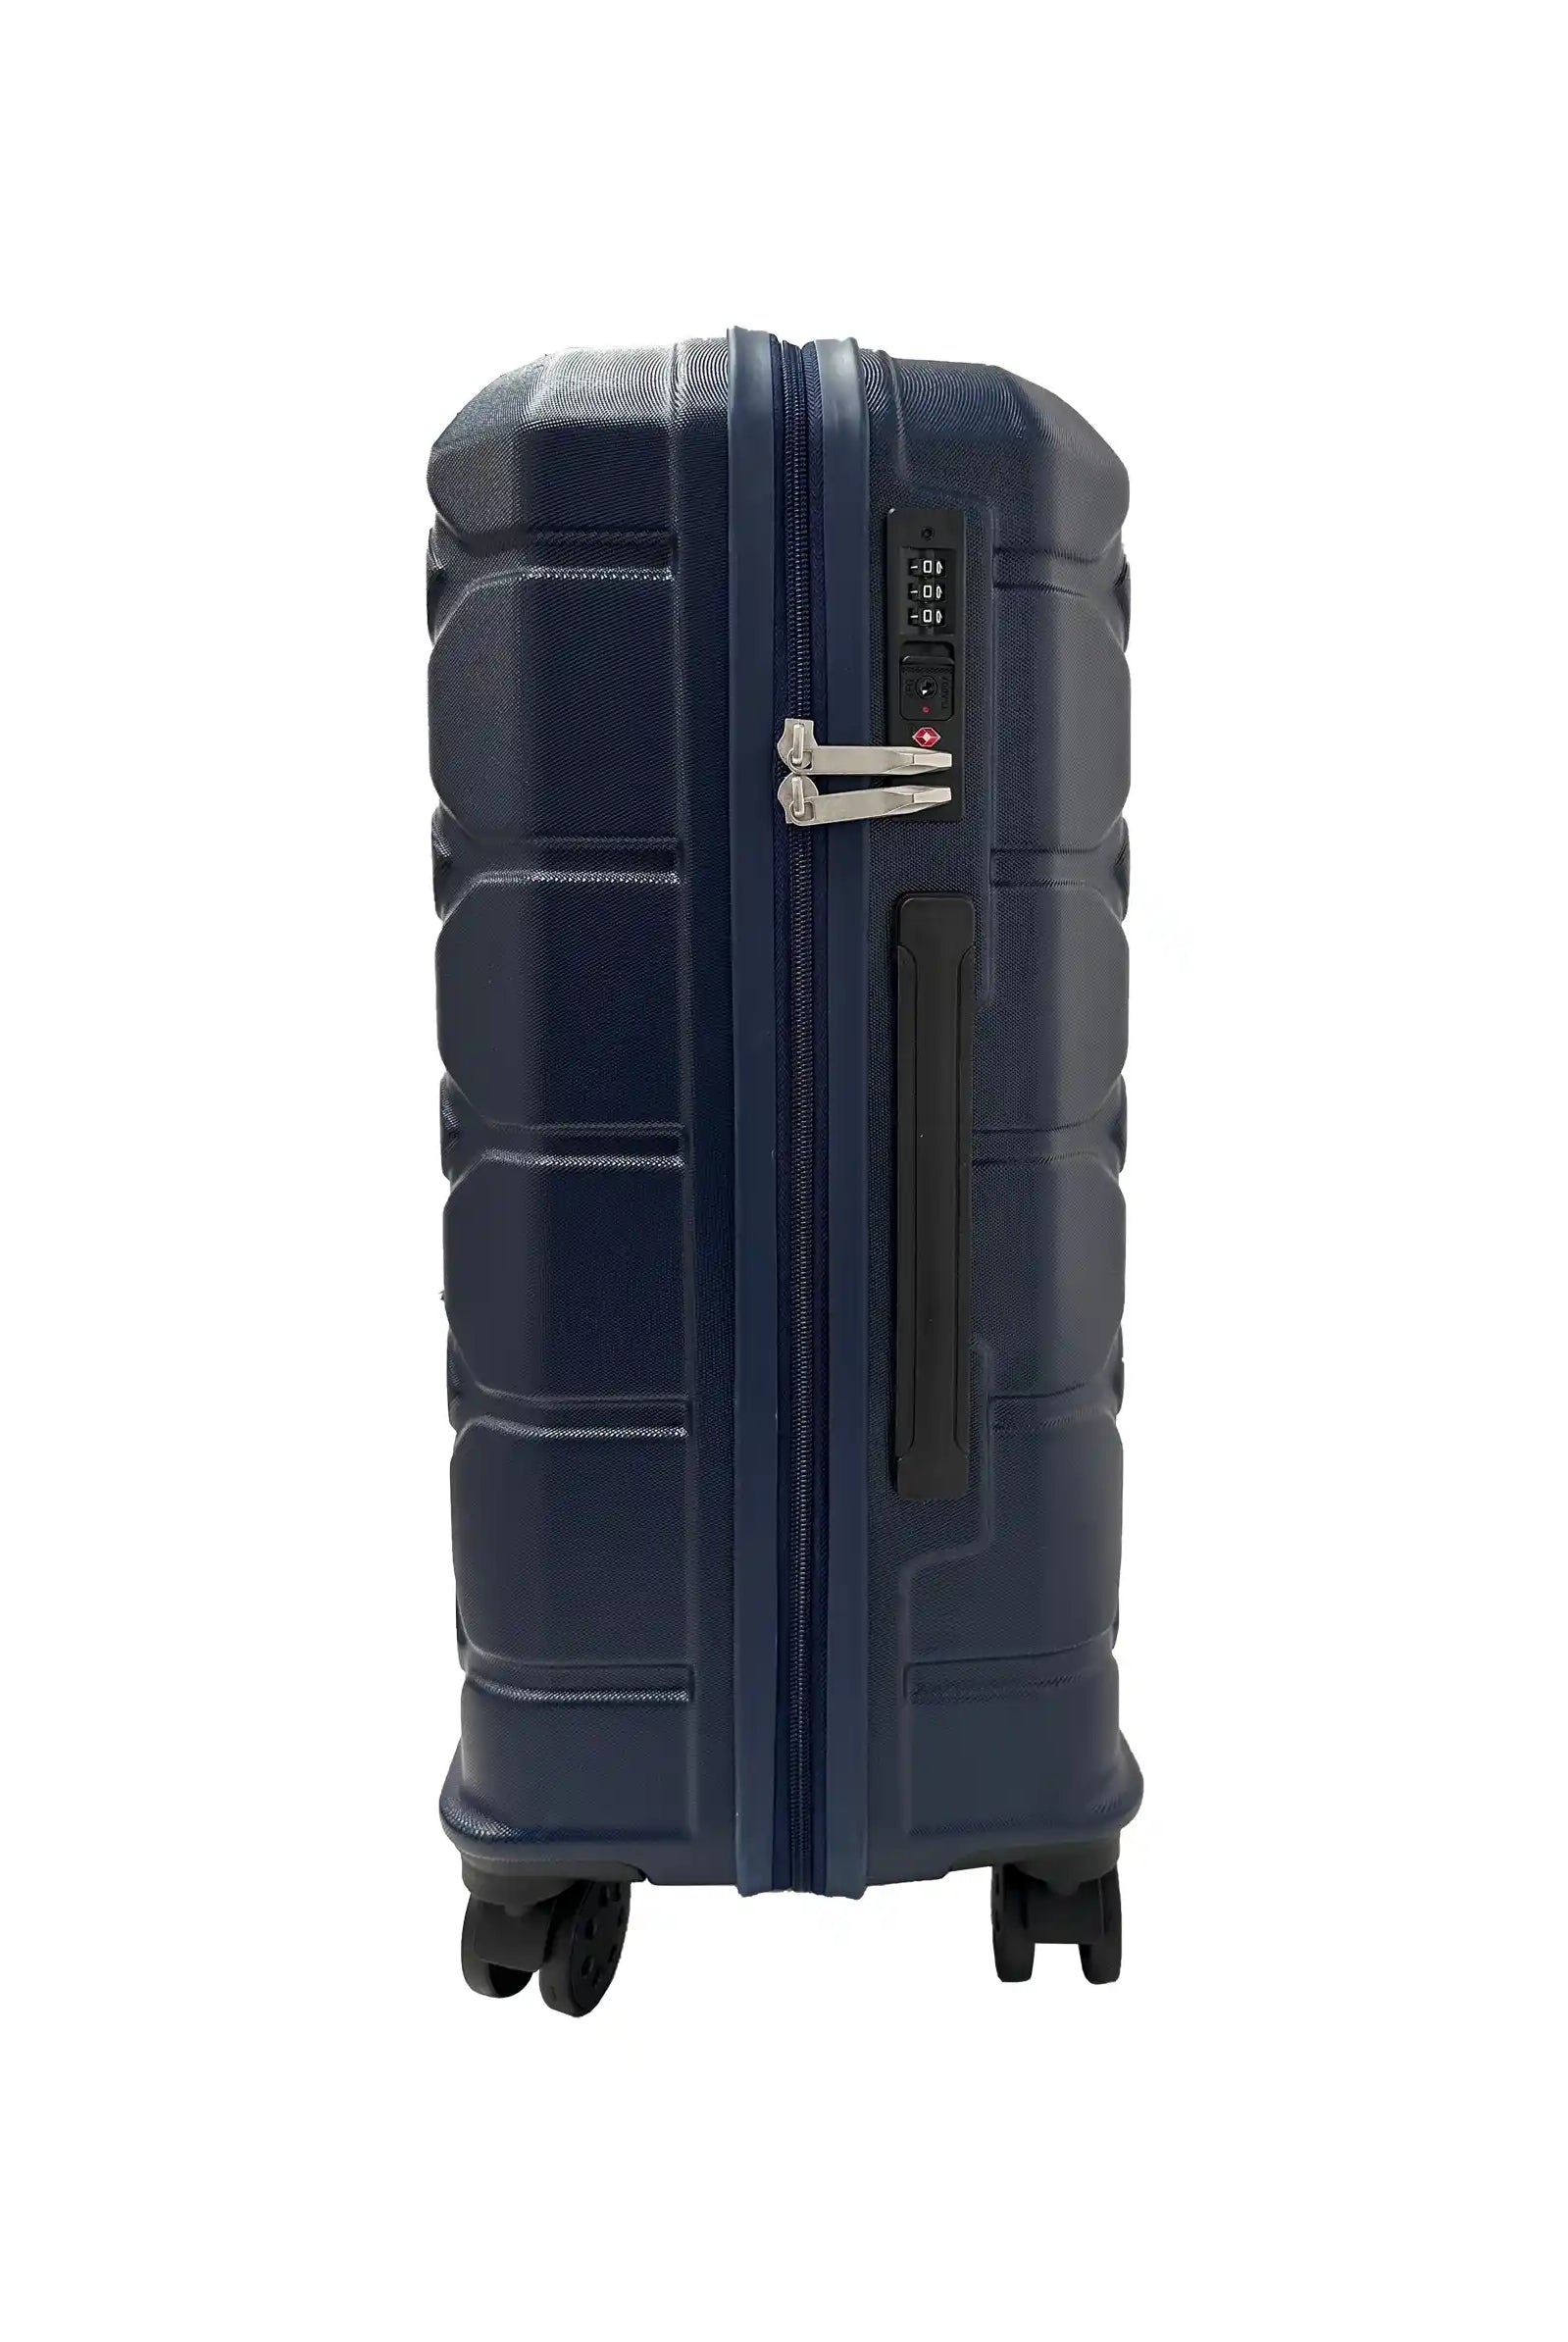 navy medium suitcase with wheels